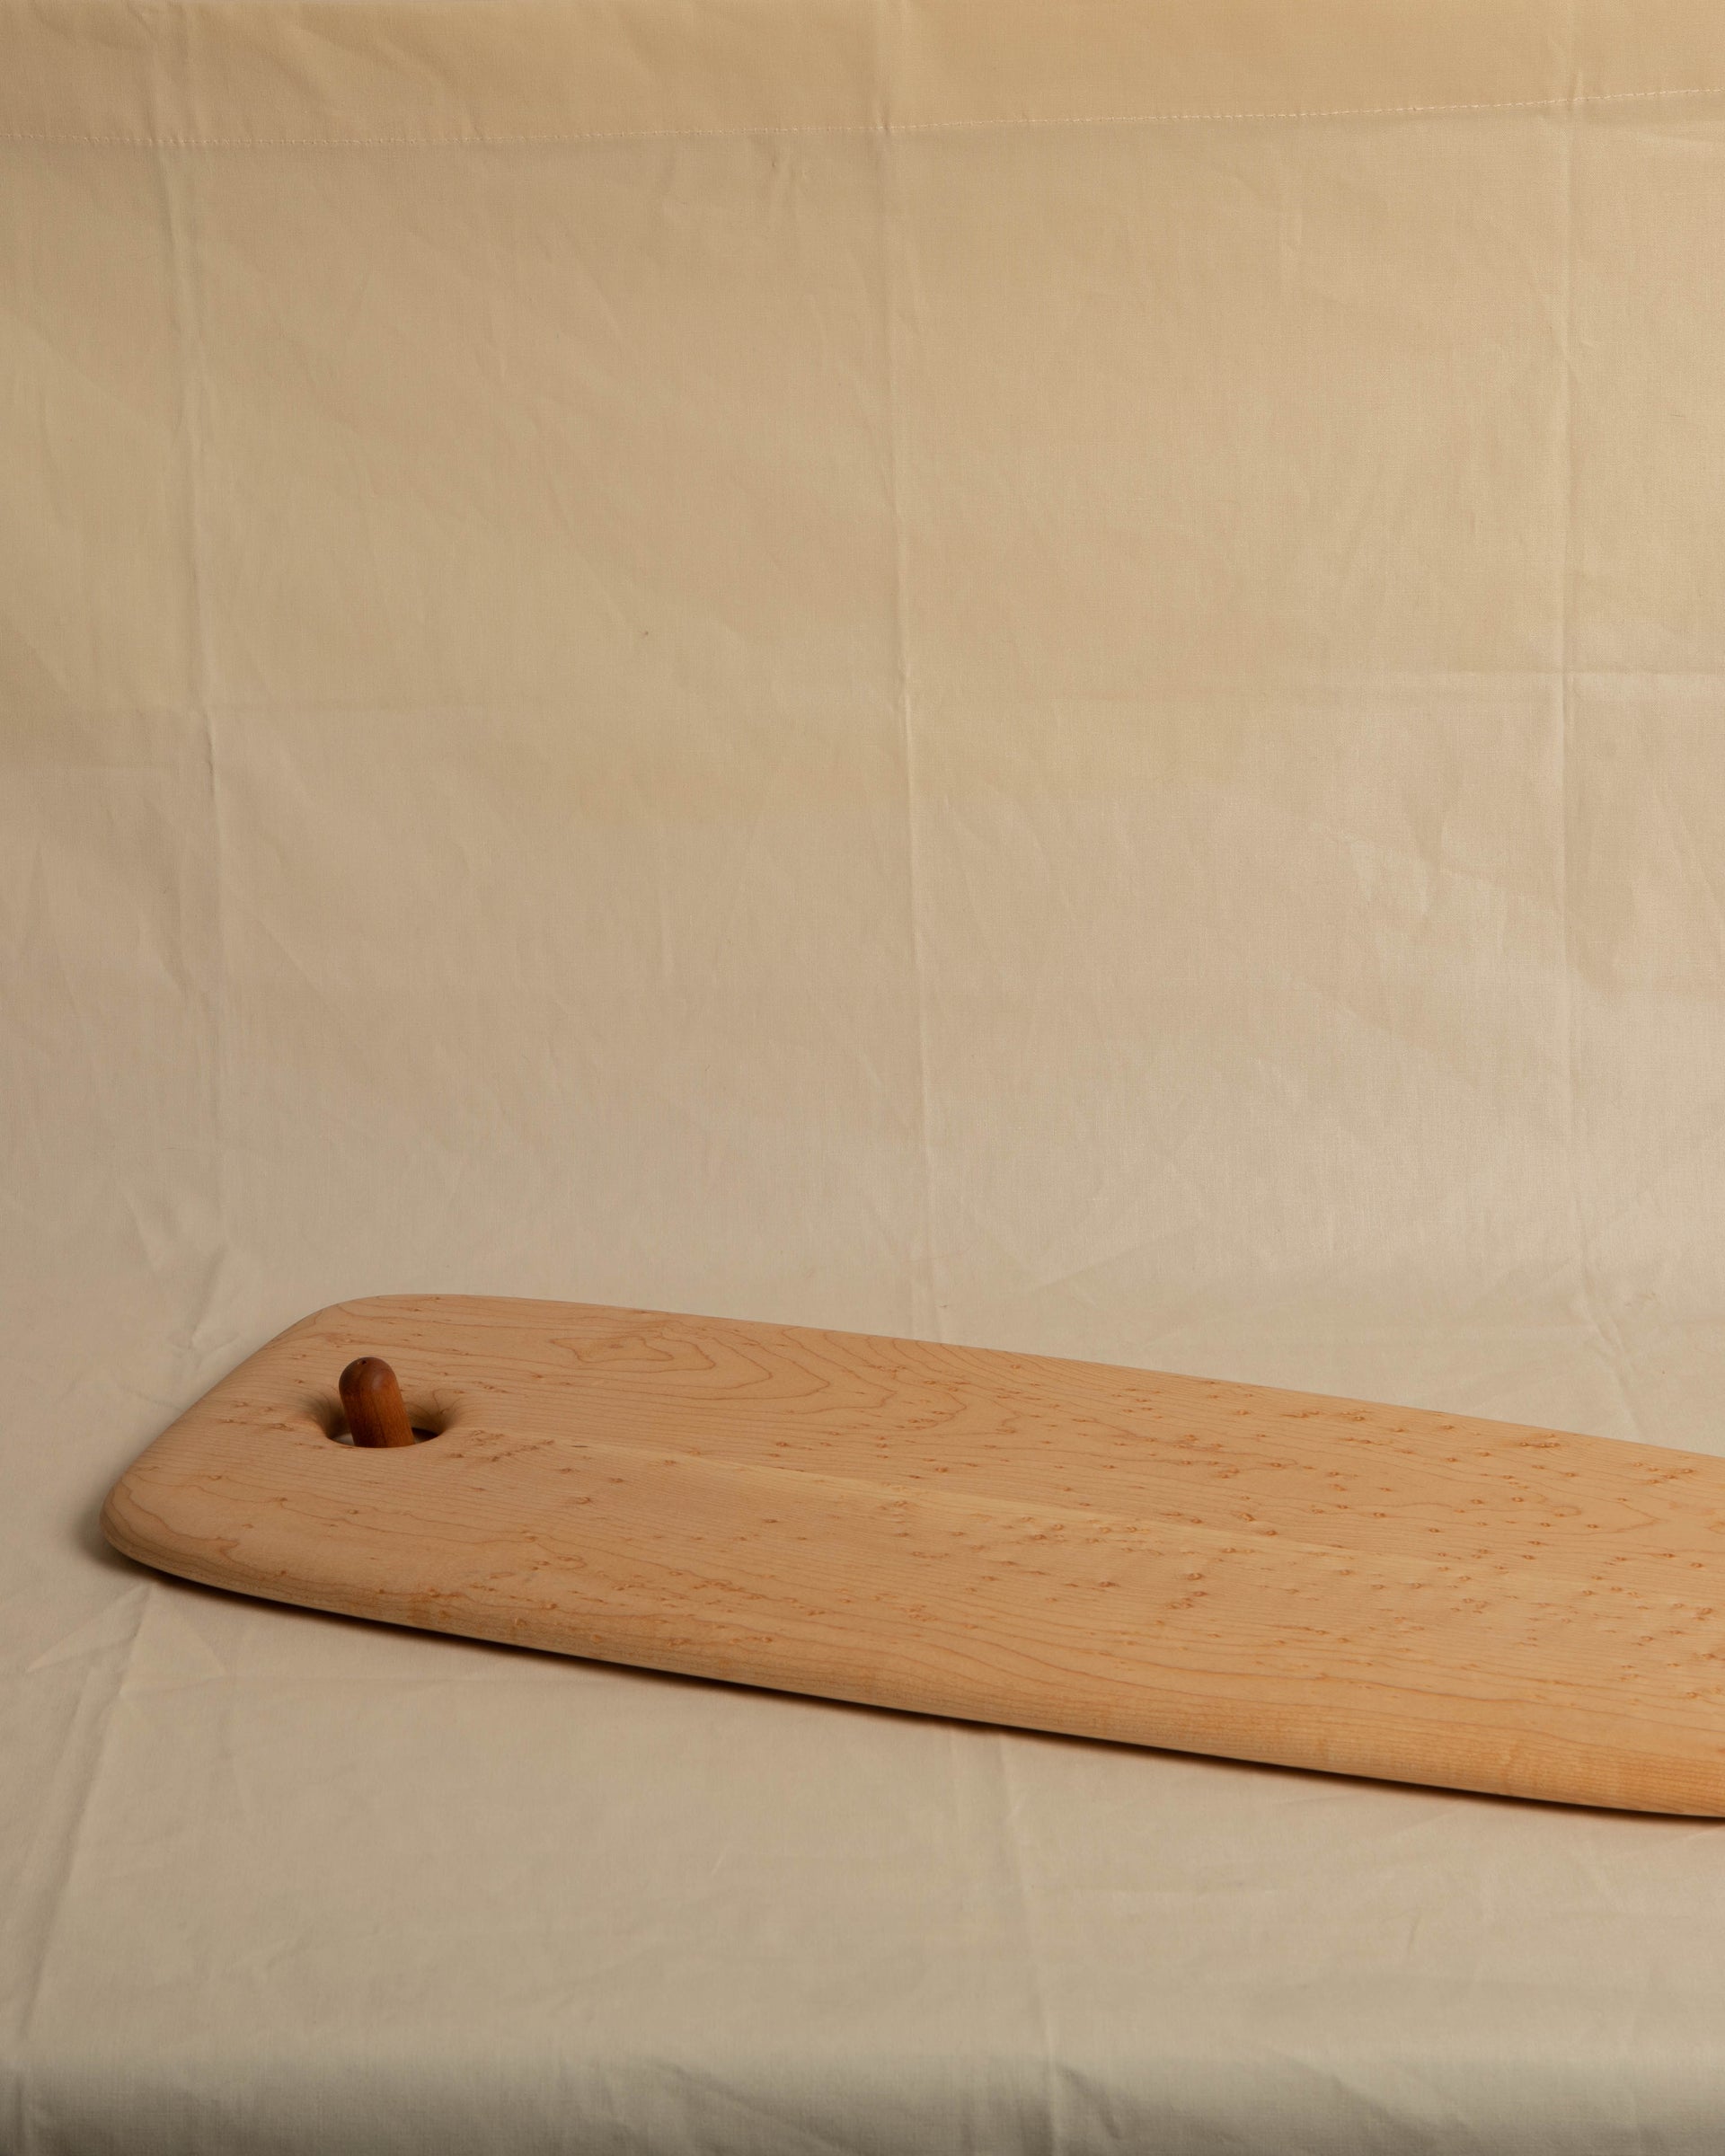 Cutting Board, Thin Rectangle #3 by Edward Wohl